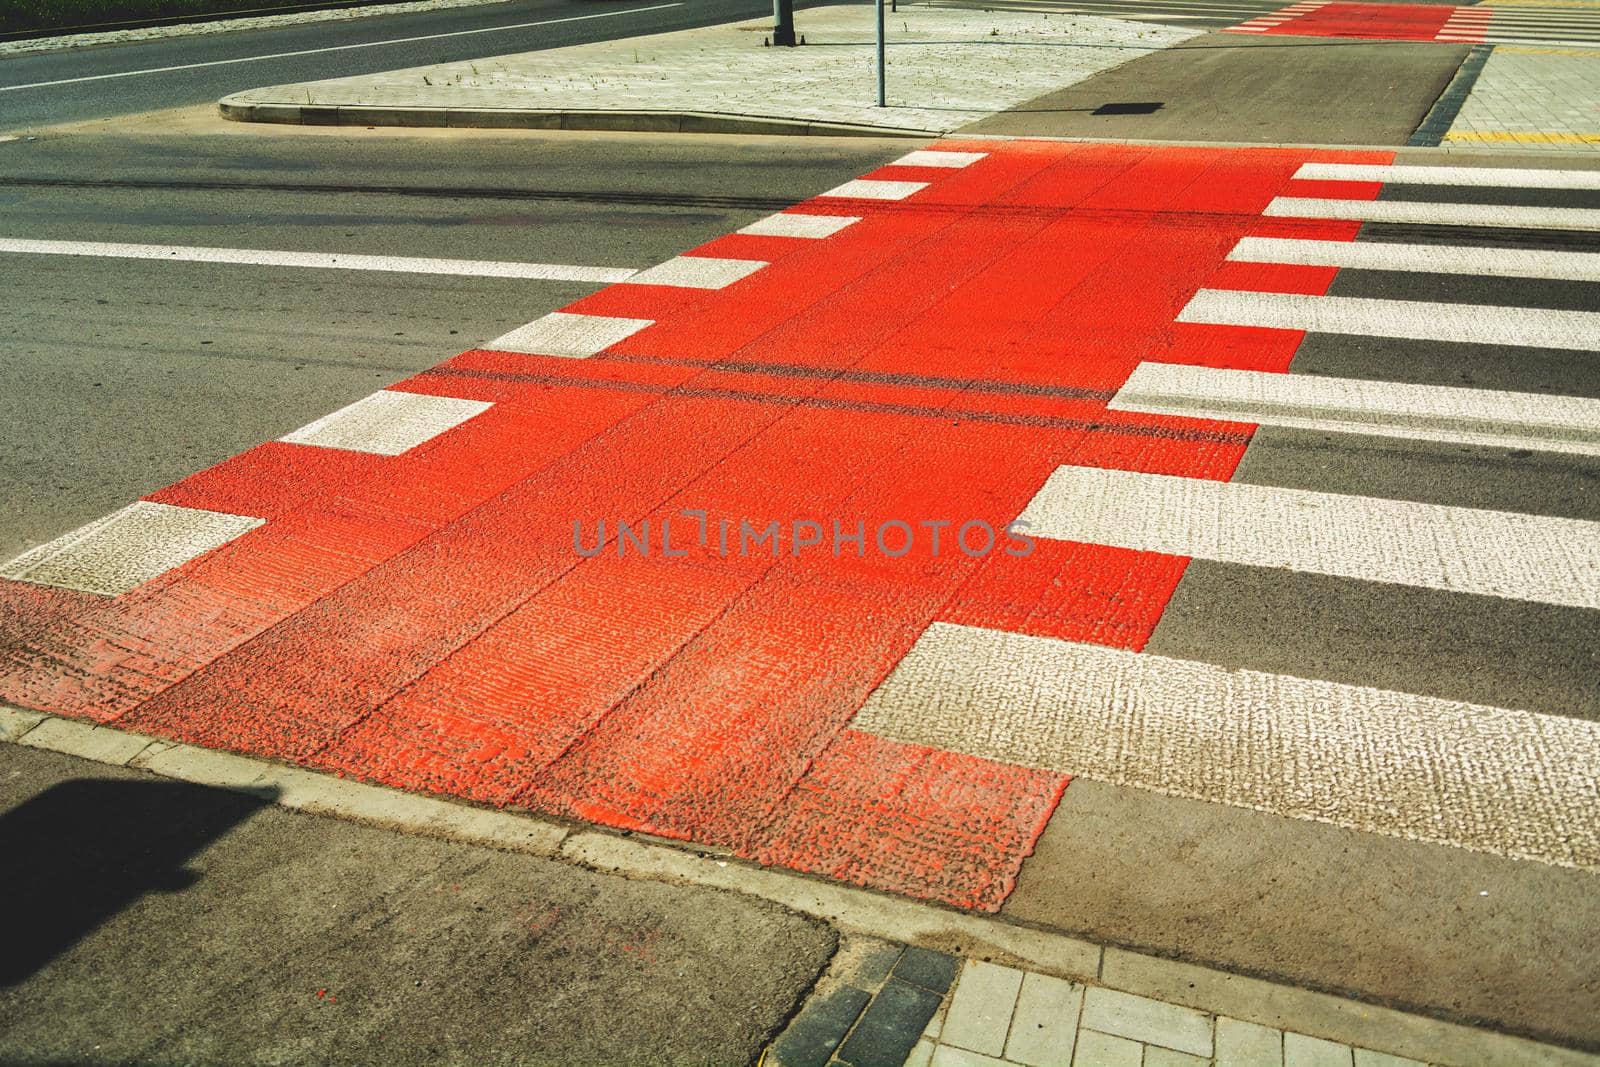 Red bike lane next to pedestrian crossing, spring day